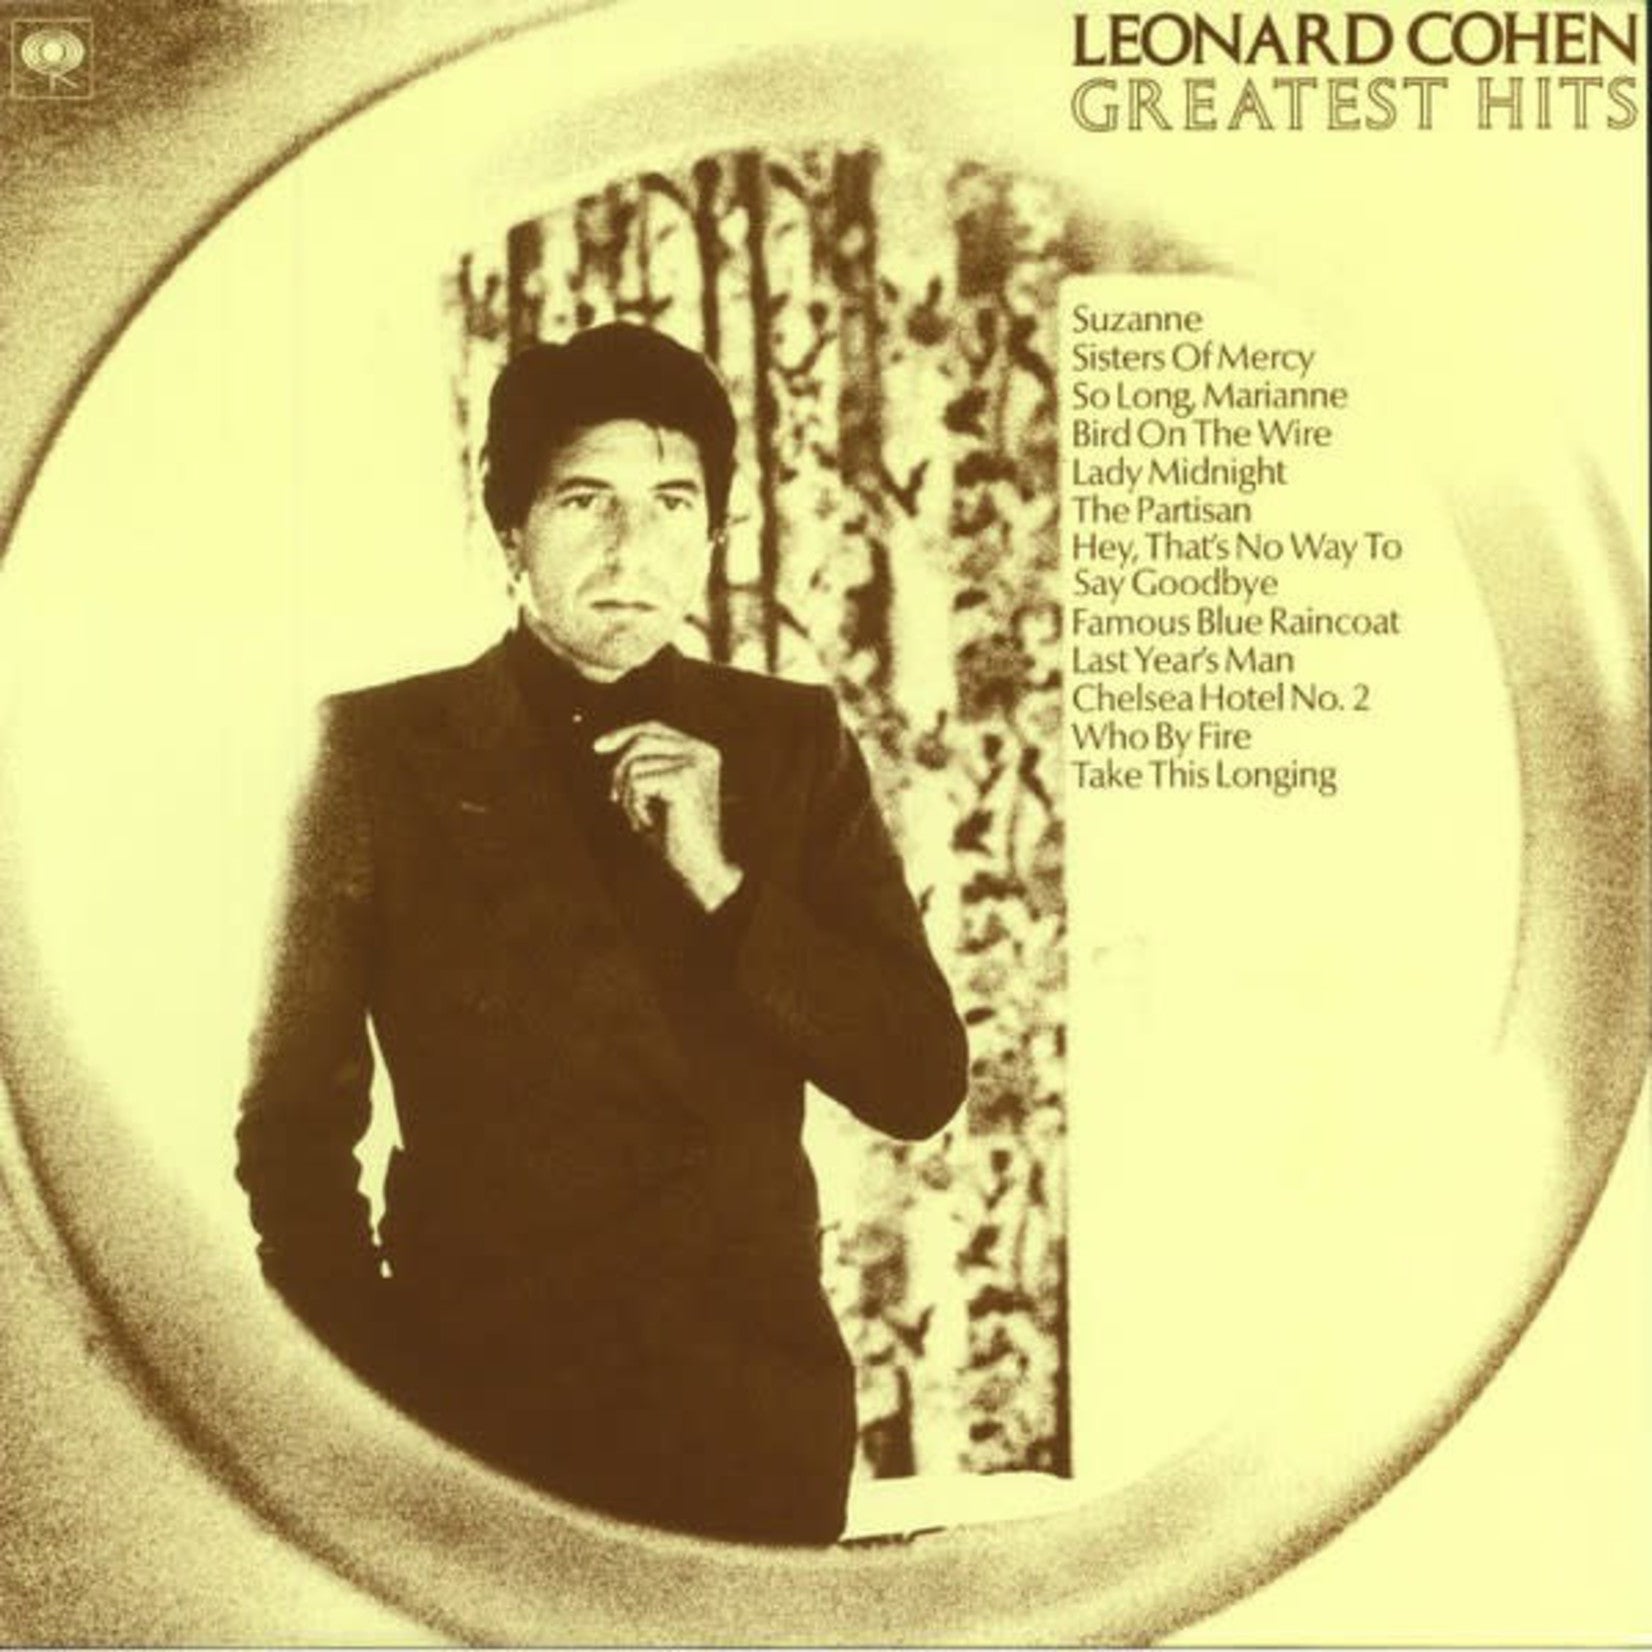 Leonard Cohen - Greatest Hits (Vinyl LP)